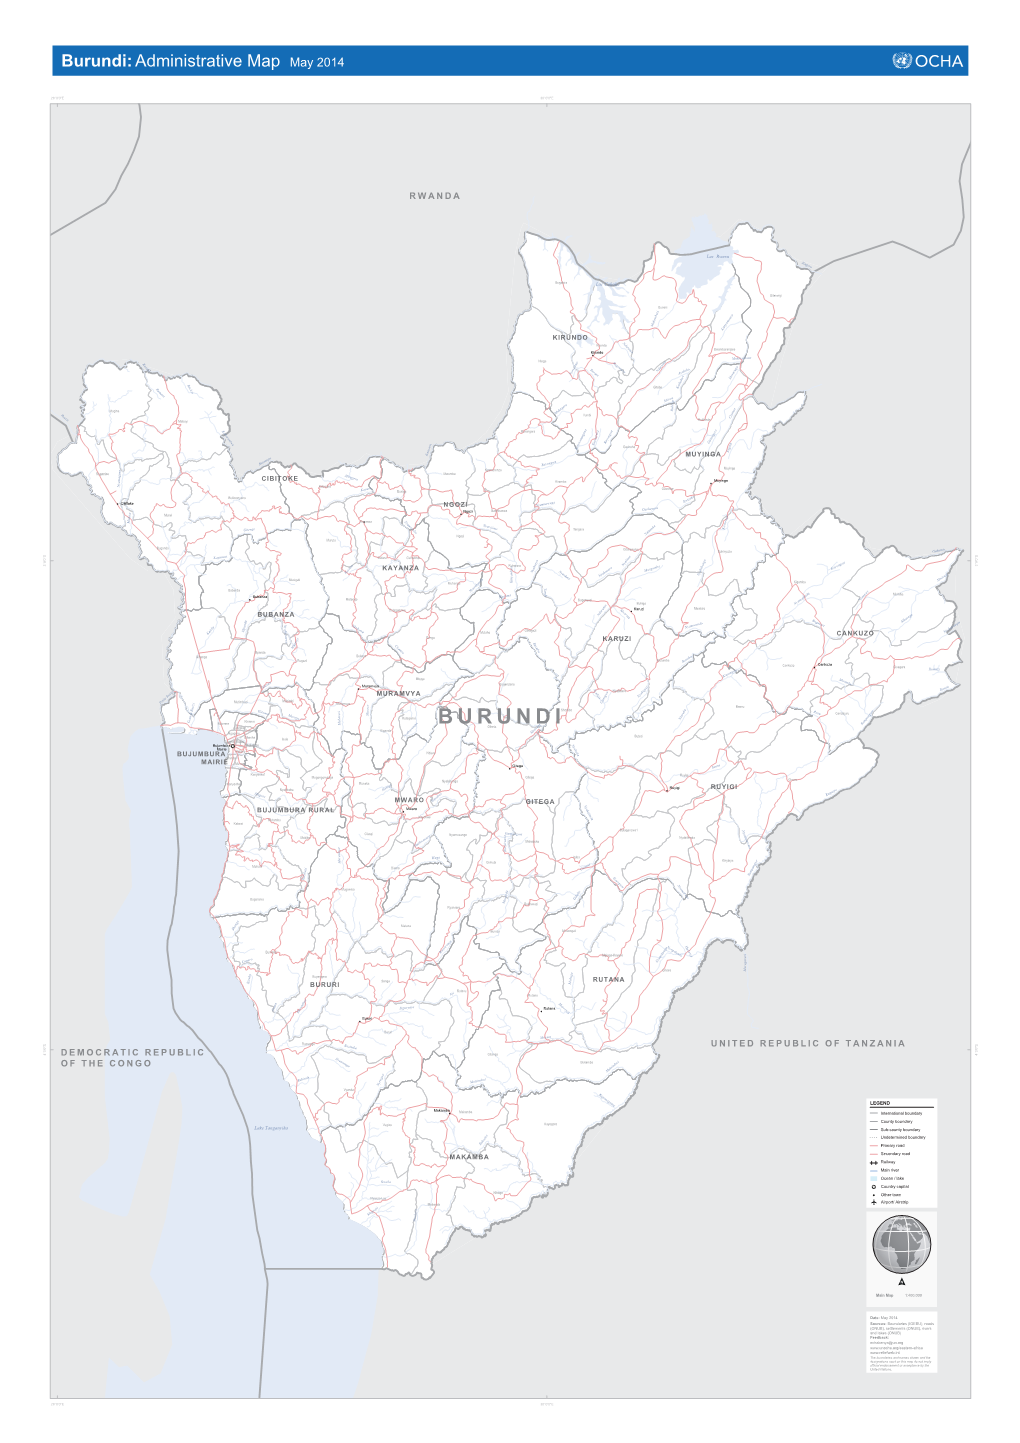 Burundi:Administrative Map May 2014